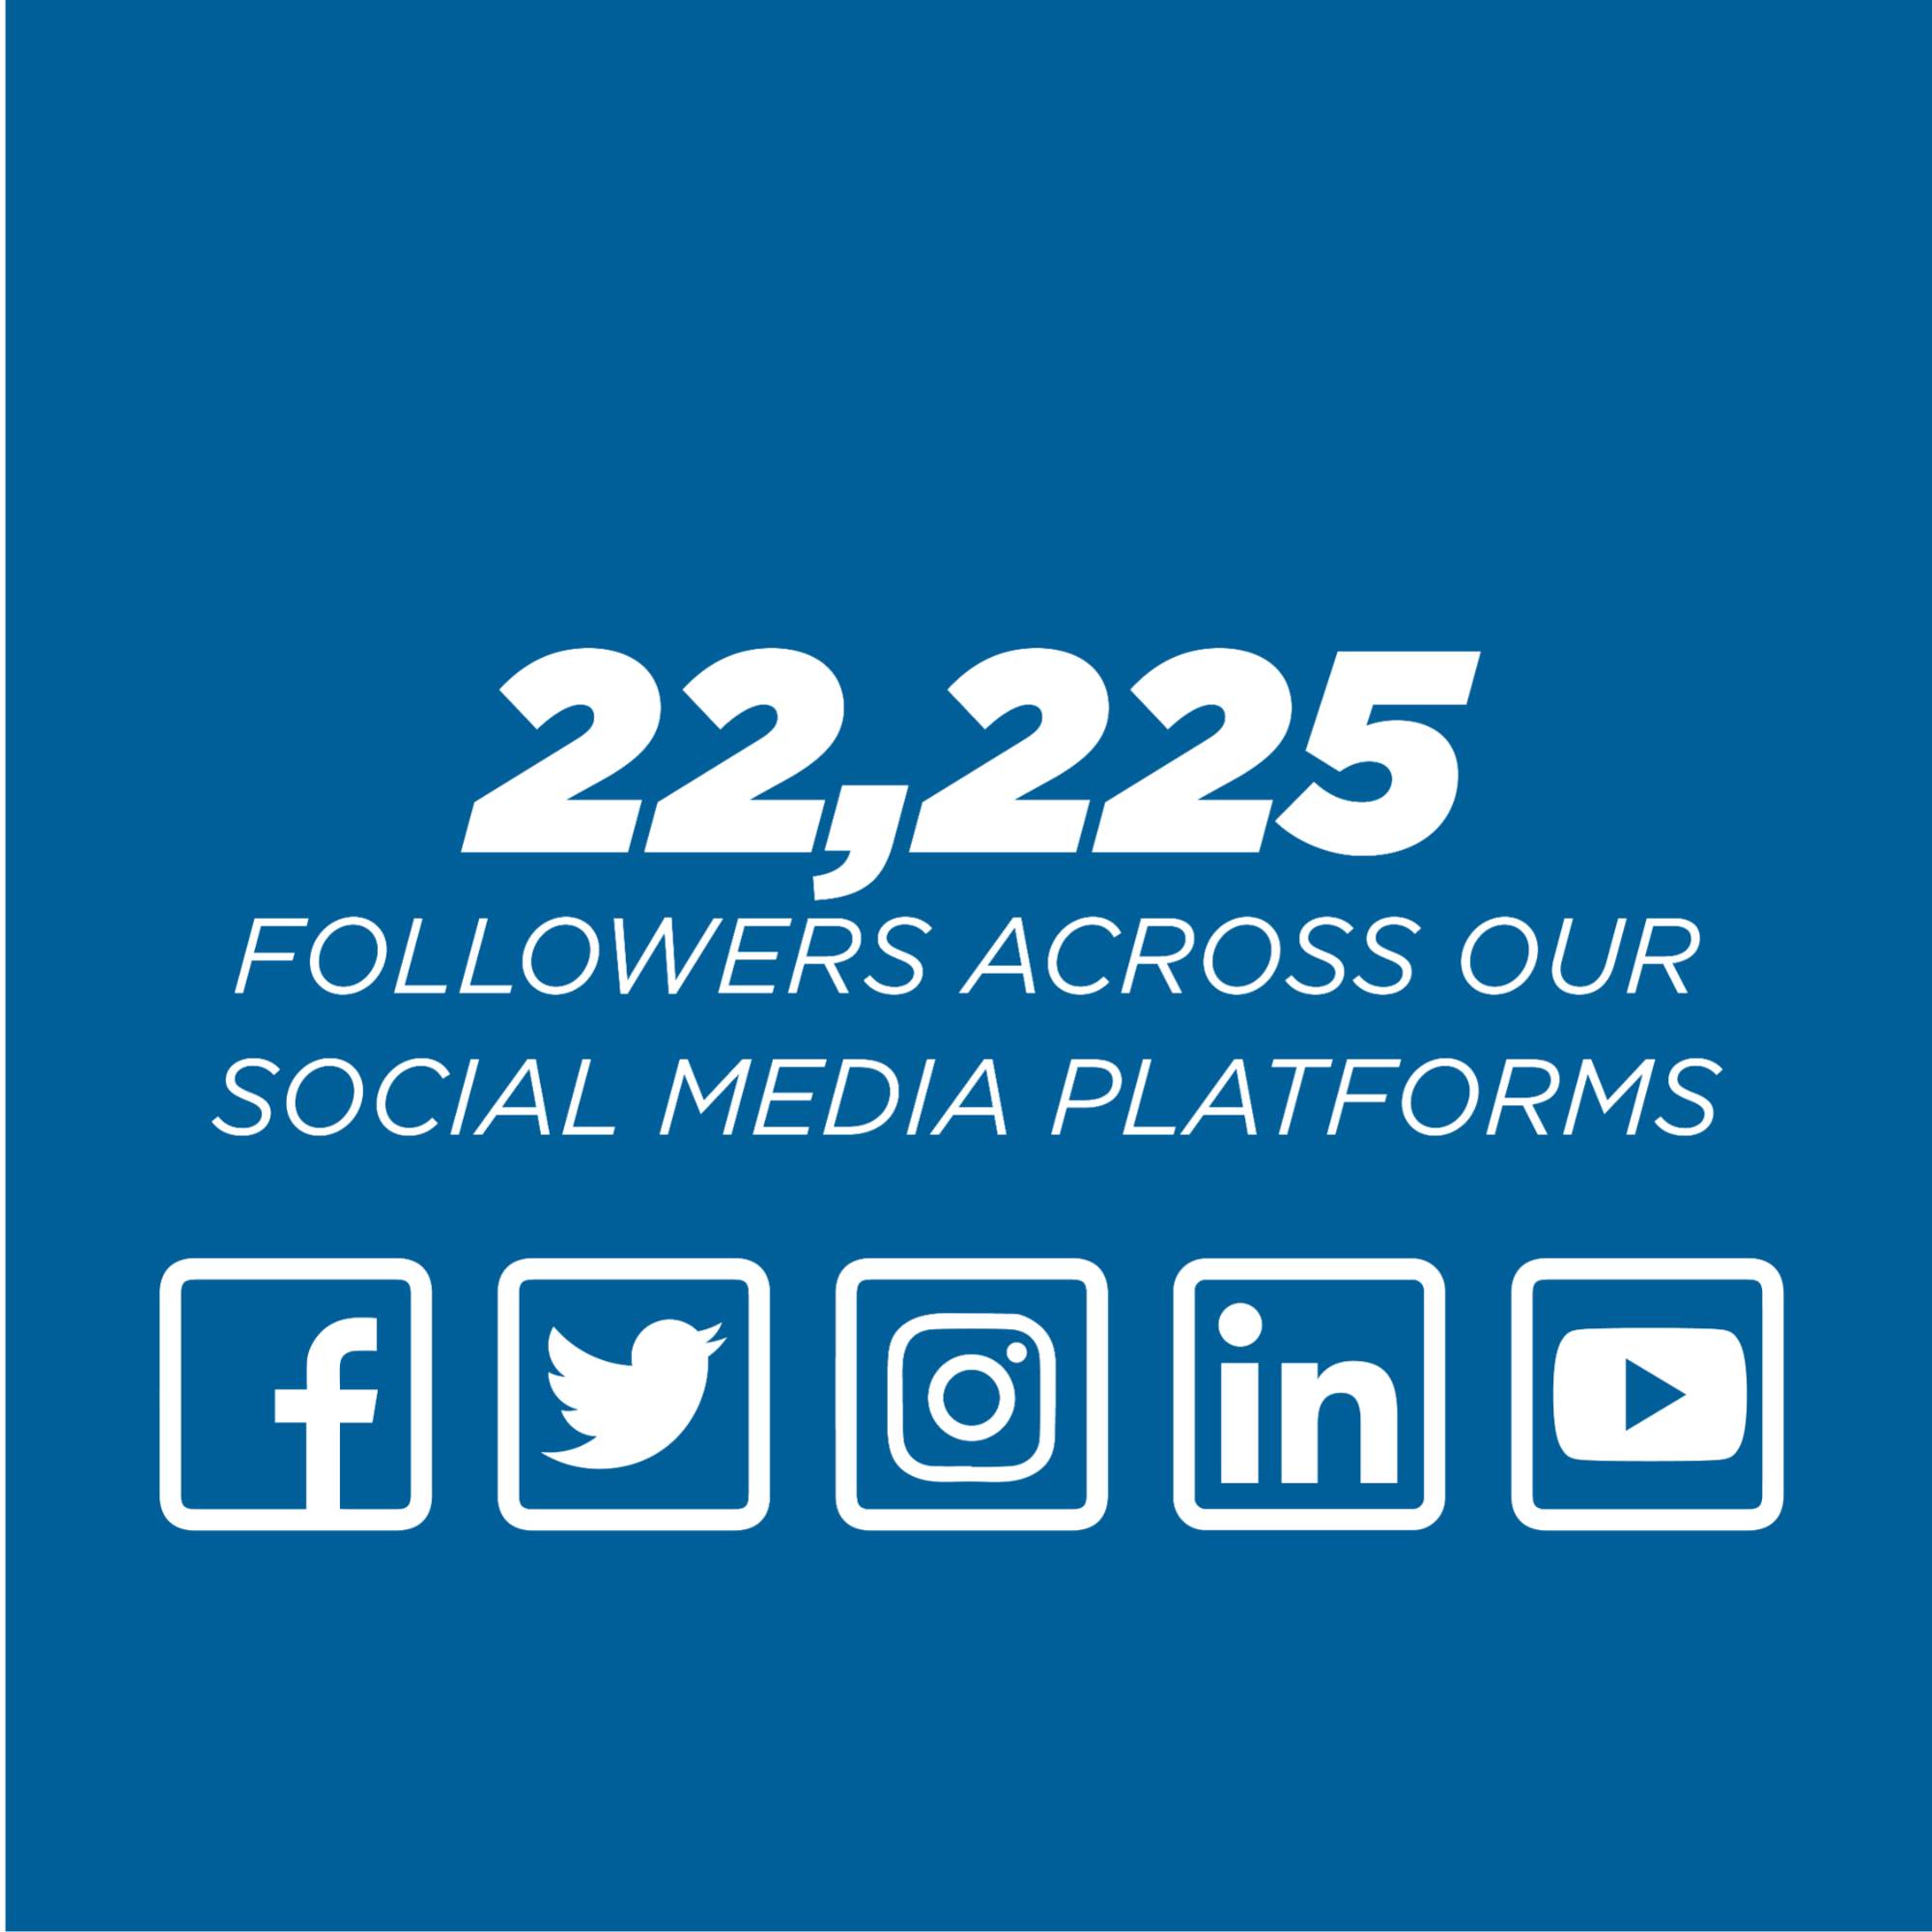 22,225 FOLLOWERS ACROSS OUR SOCIAL MEDIA PLATFORMS